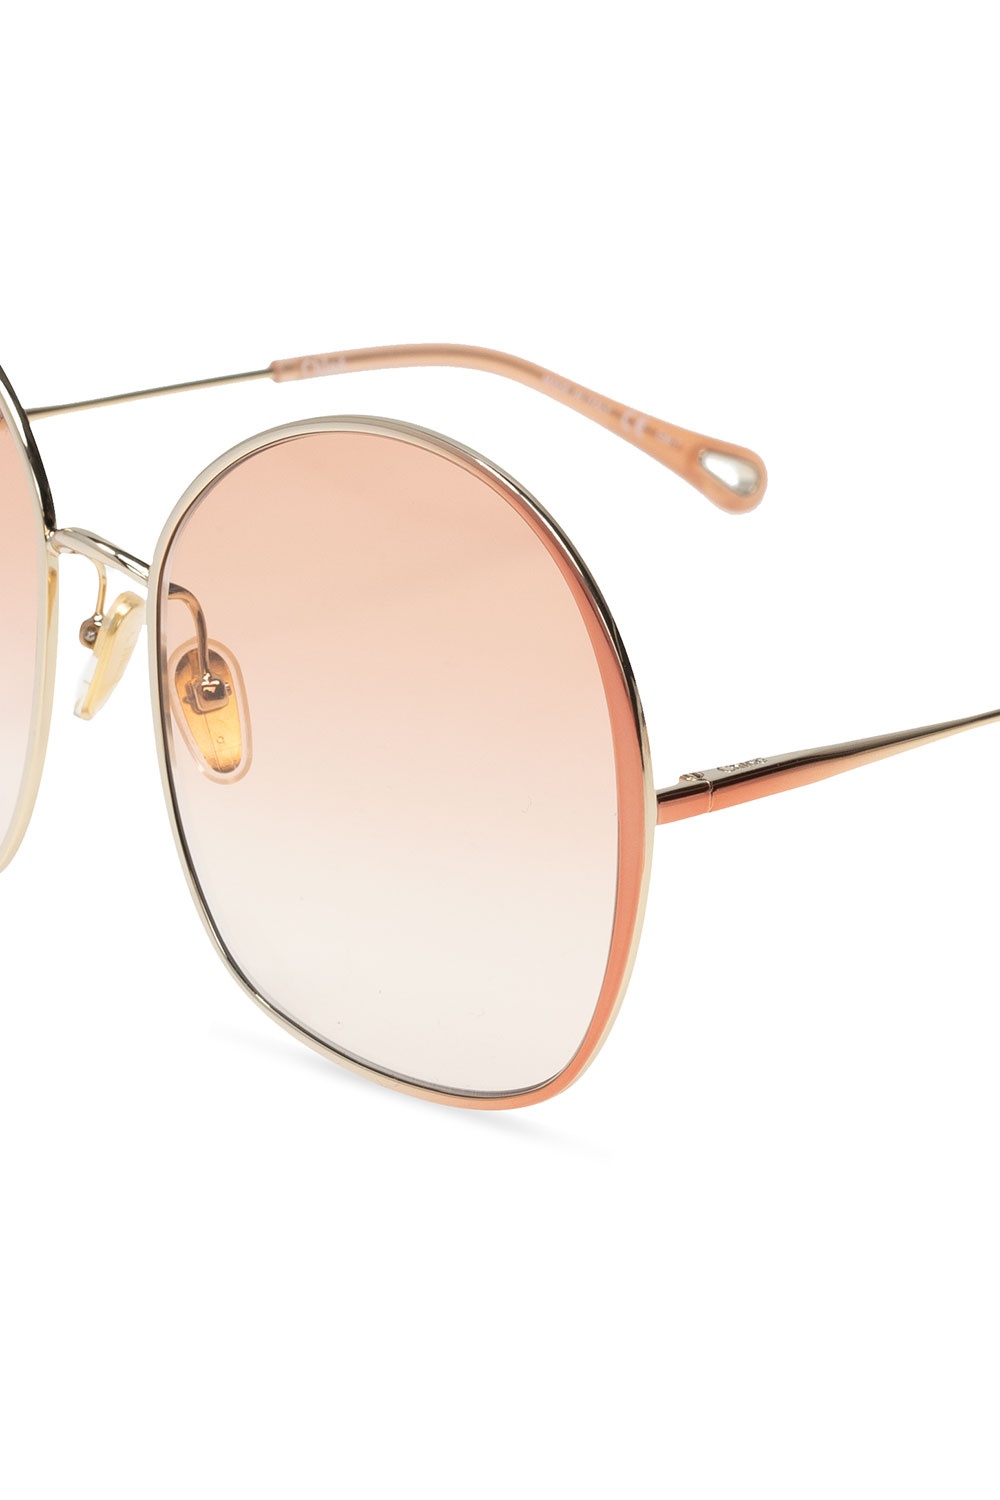 Chloé Sunglasses | Women's Accessories | IetpShops